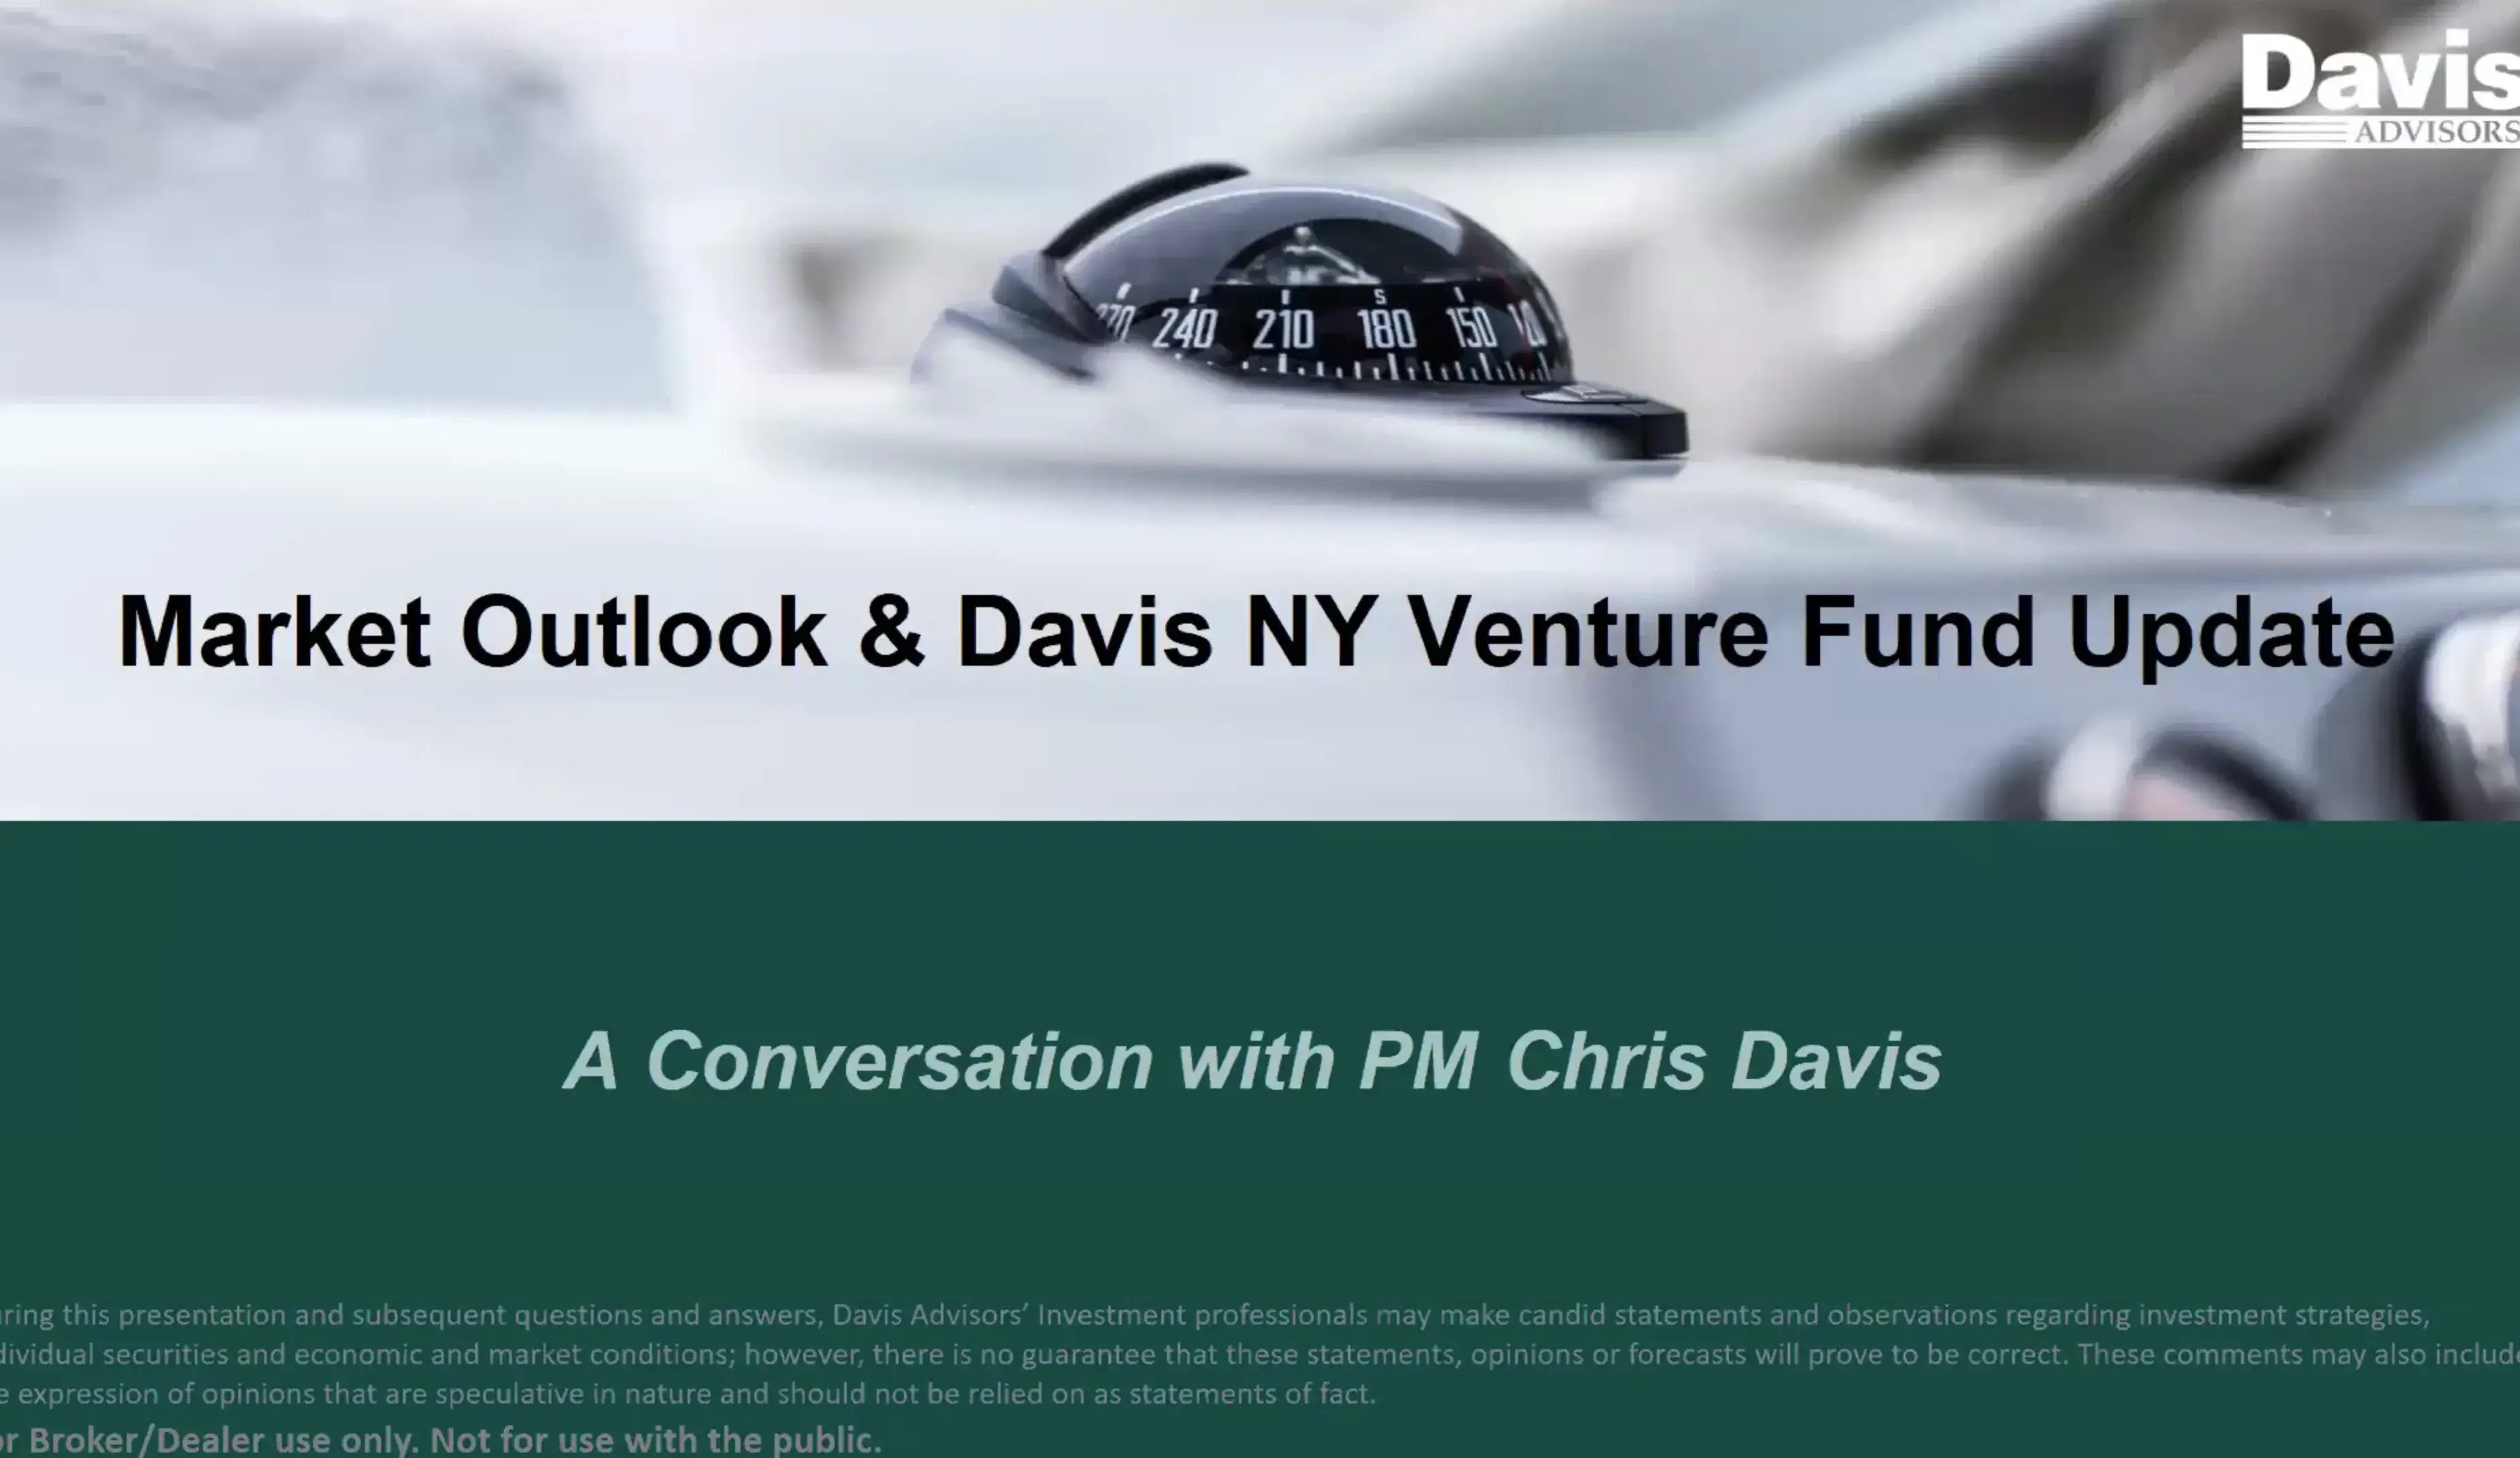 PM Chris Davis Update on Davis NY Venture Fund